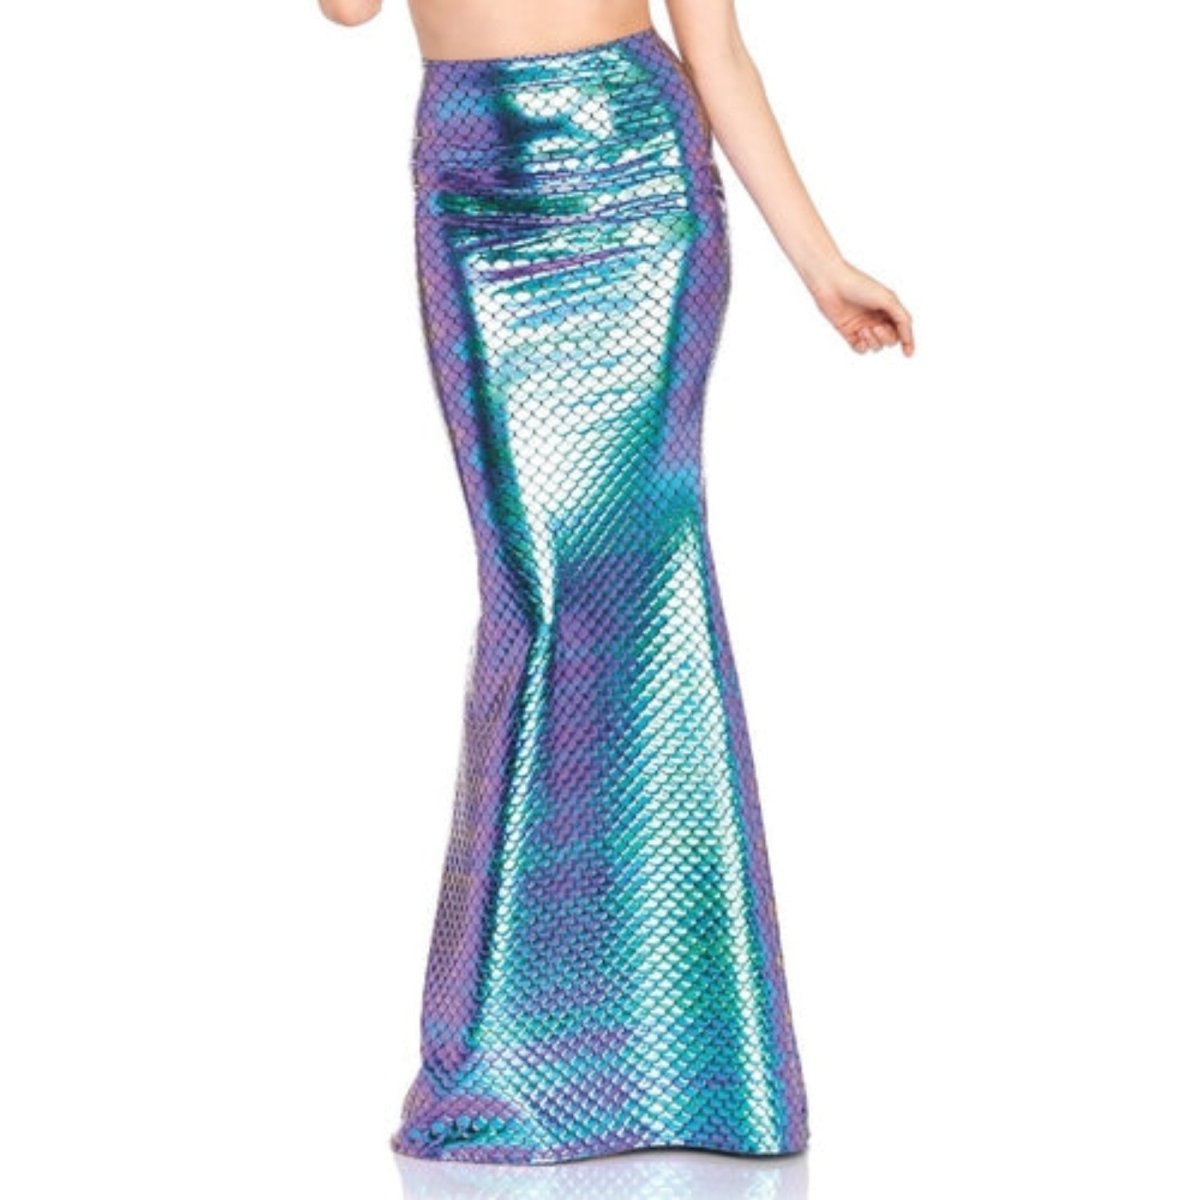 Teal Iridescent Scale Mermaid Maxi Skirt - worldclasscostumes